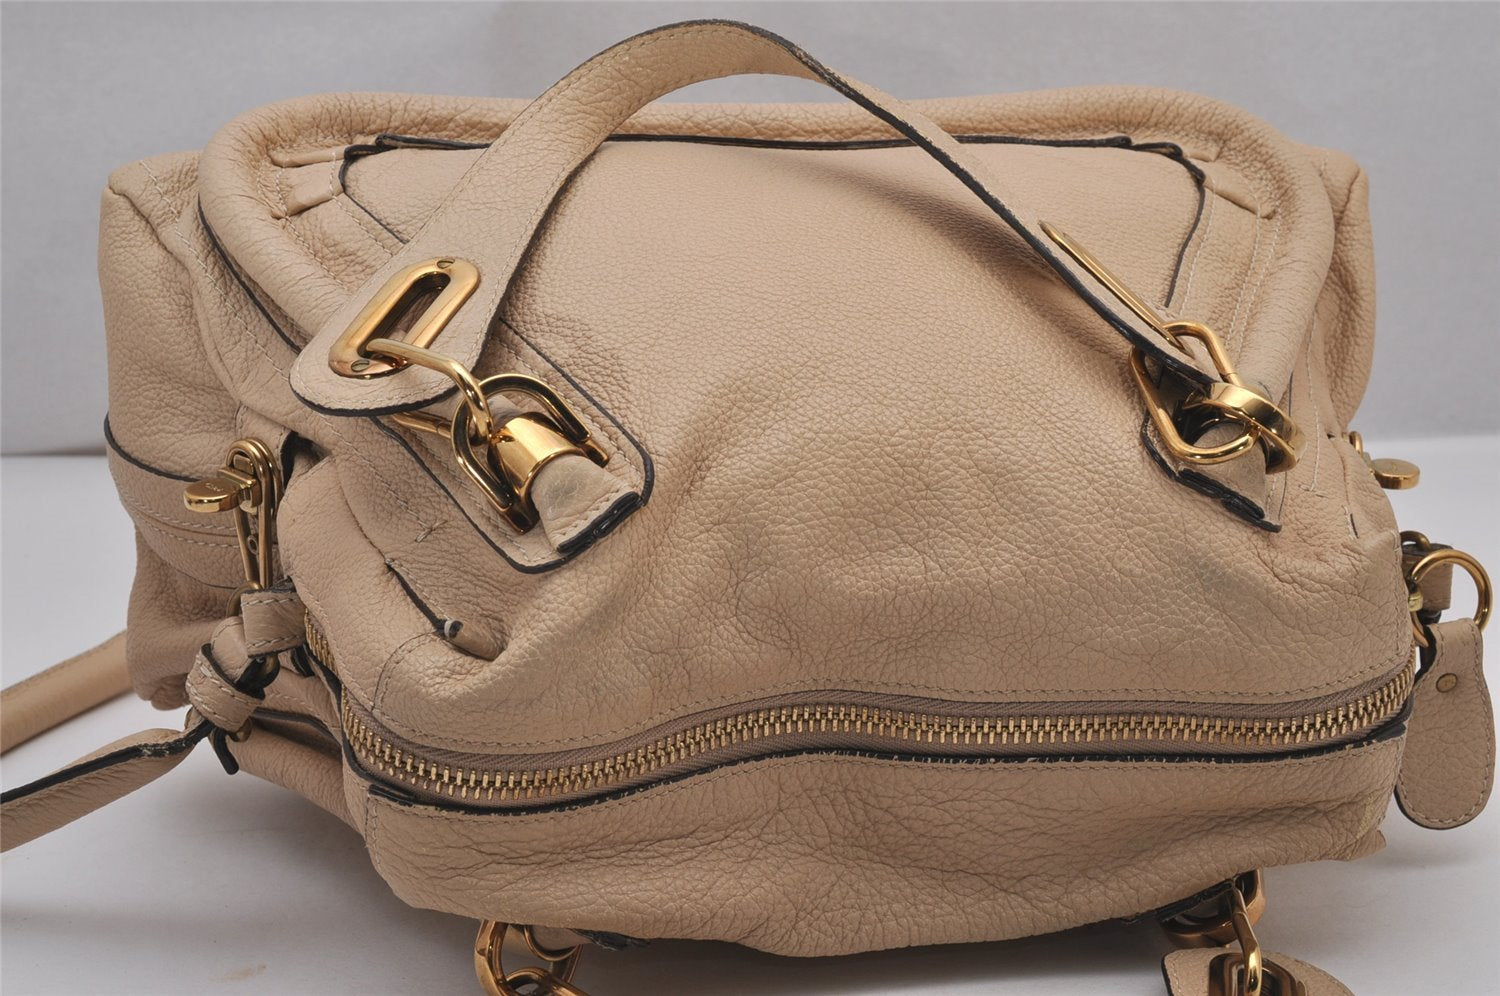 Authentic Chloe Paraty Medium 2Way Shoulder Hand Bag Purse Leather Beige 8960I